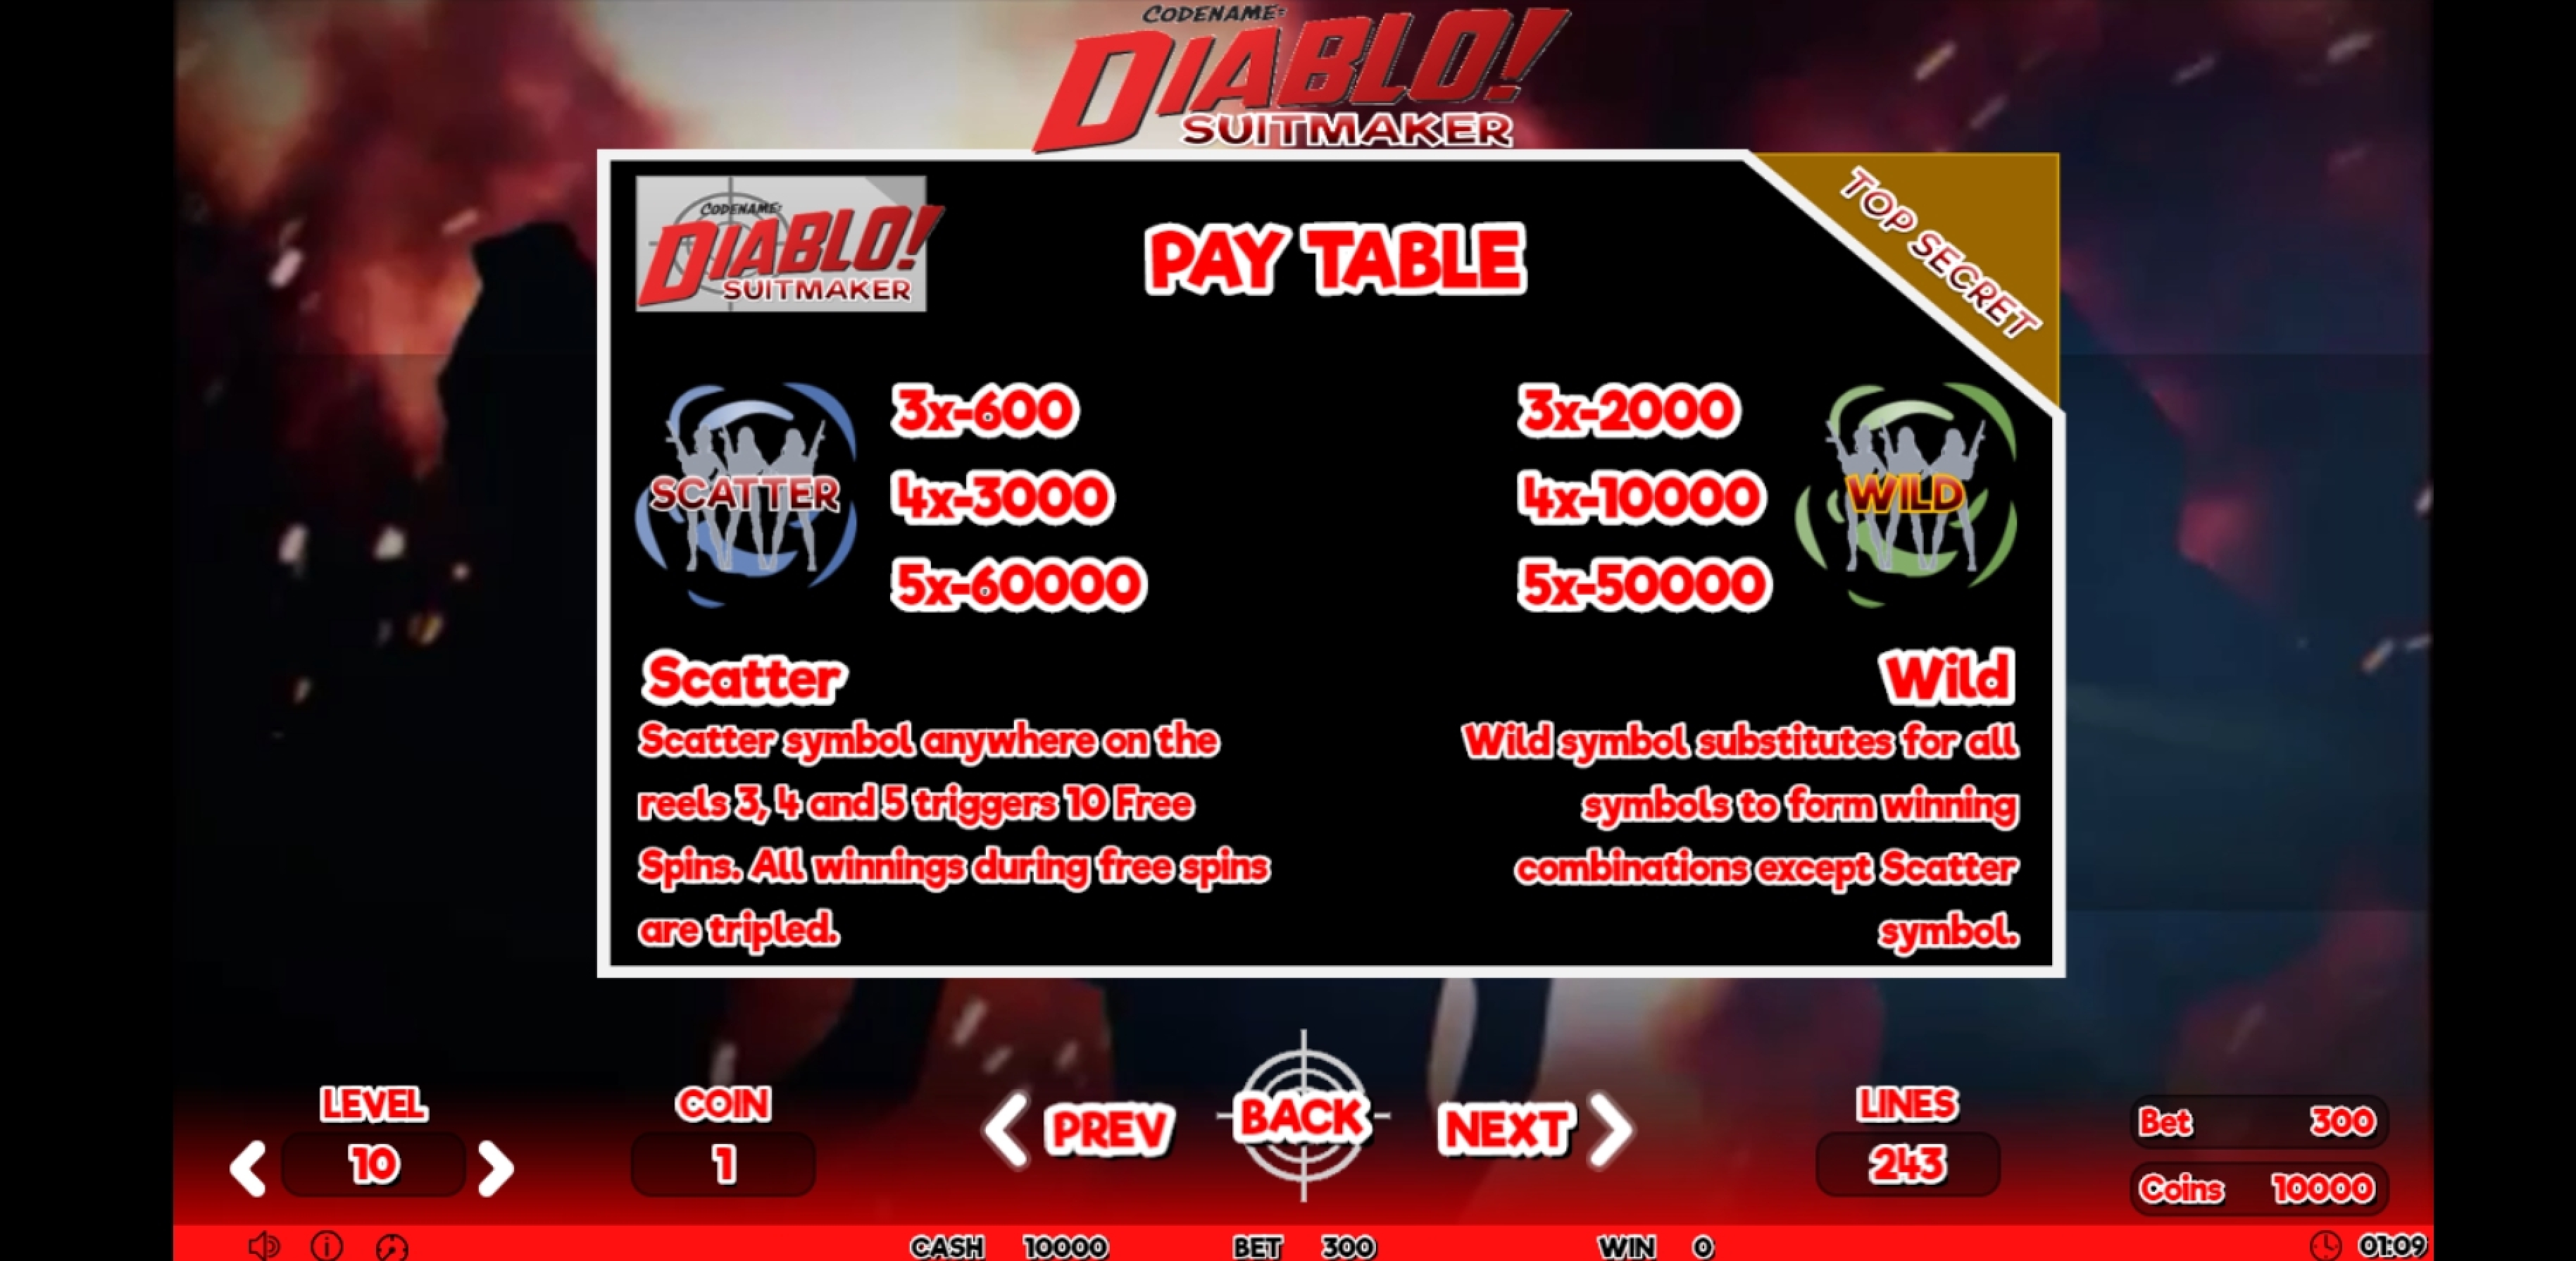 Info of Codename Diablo Suitmaker Slot Game by Skyrocket Entertainment